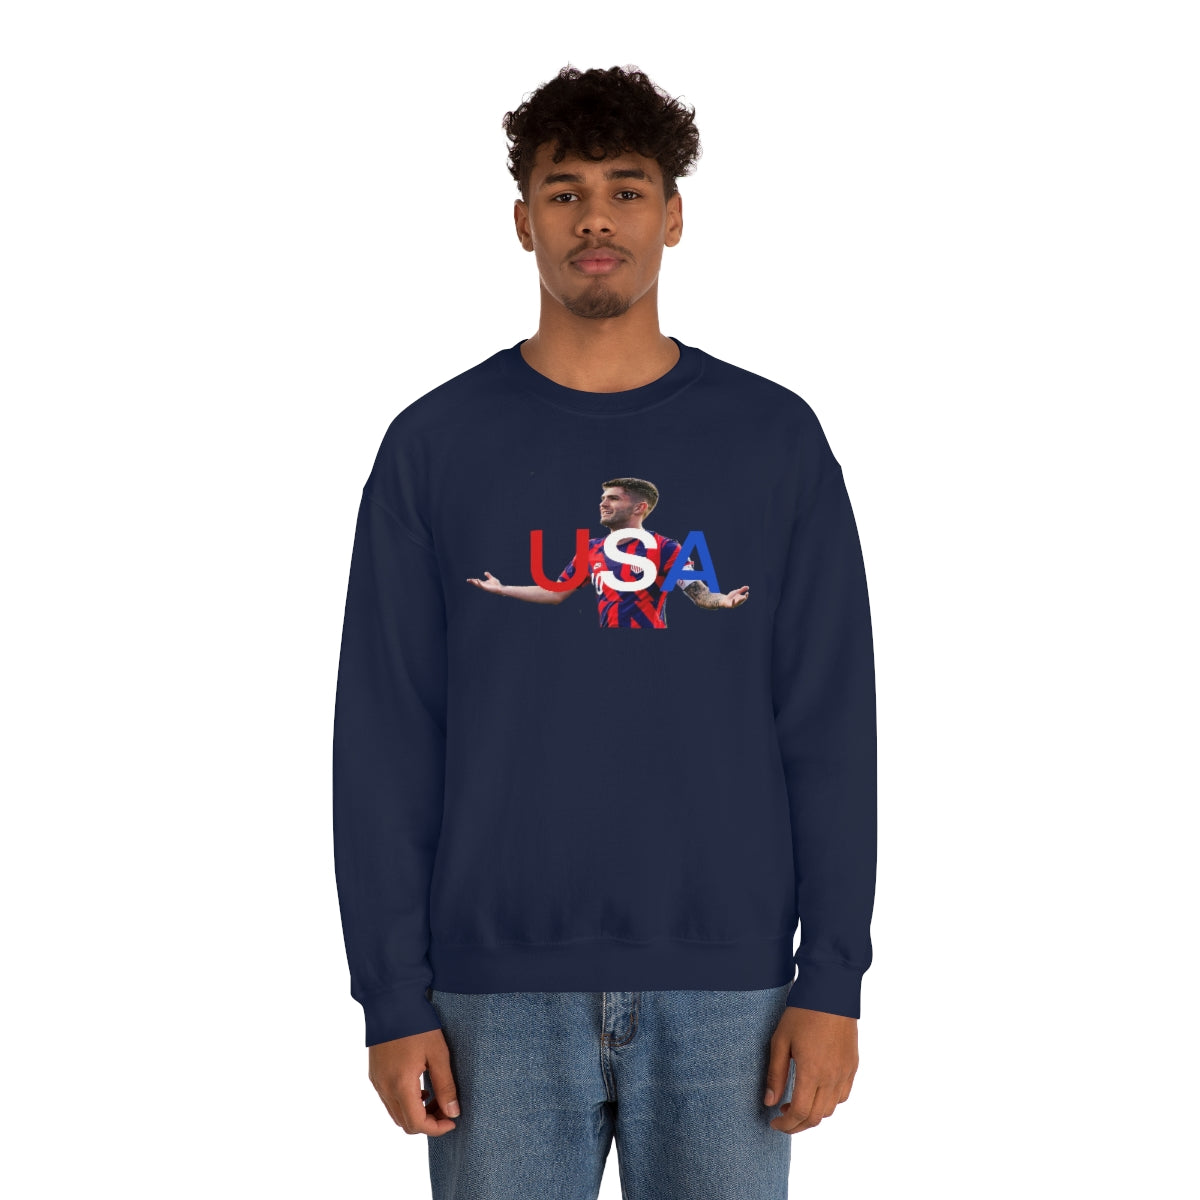 Pulisic USA Soccer Crewneck Sweatshirt - IsGoodBrand